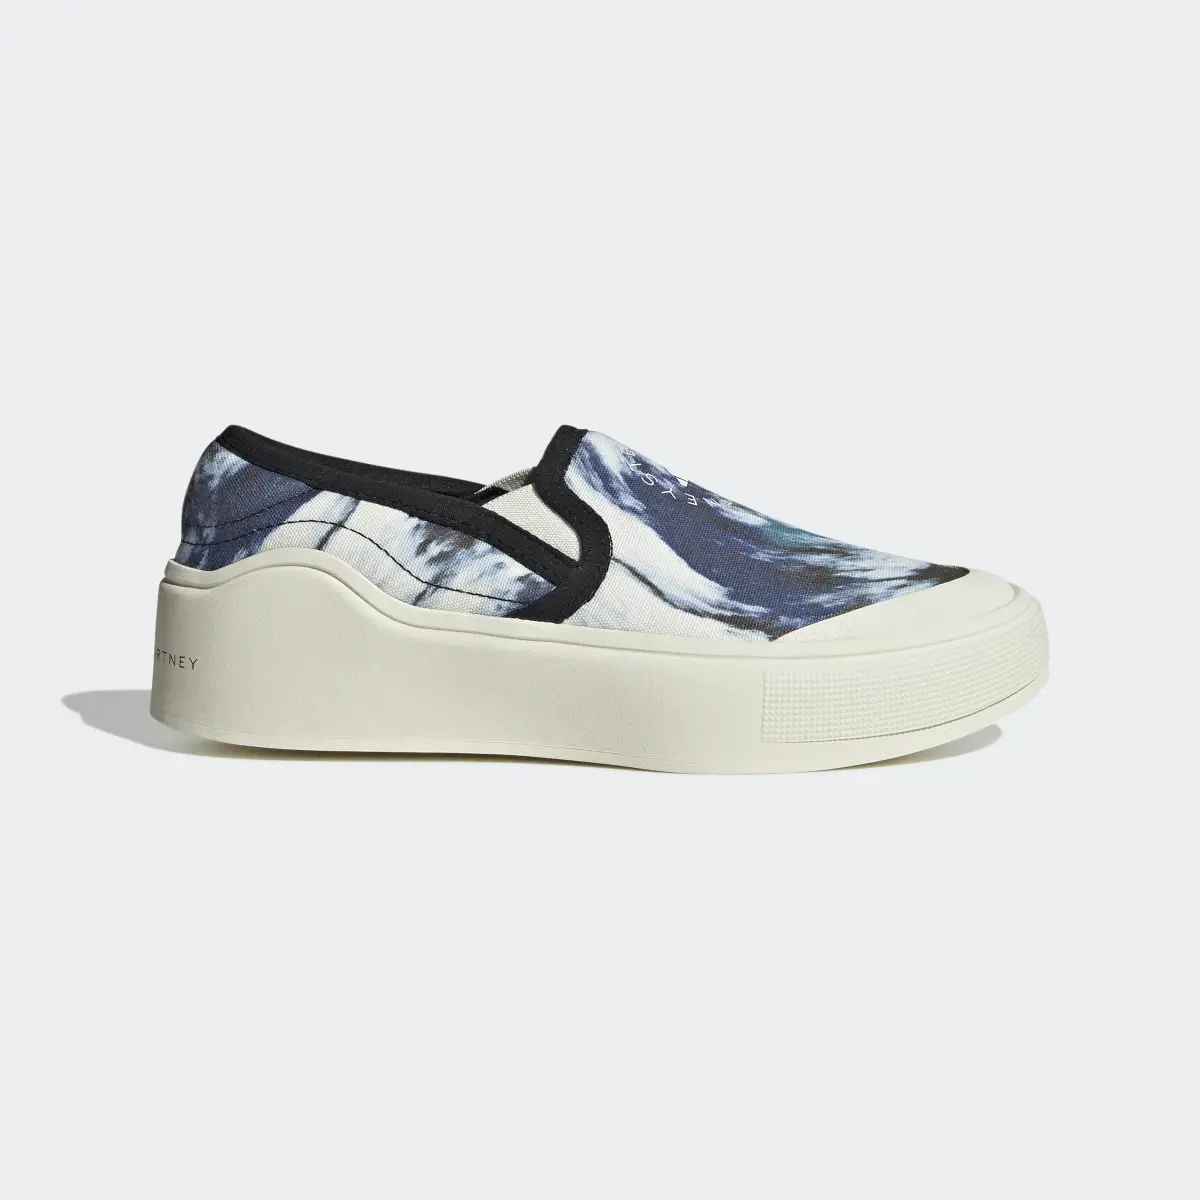 Adidas by Stella McCartney Court Slip-On Shoes. 2